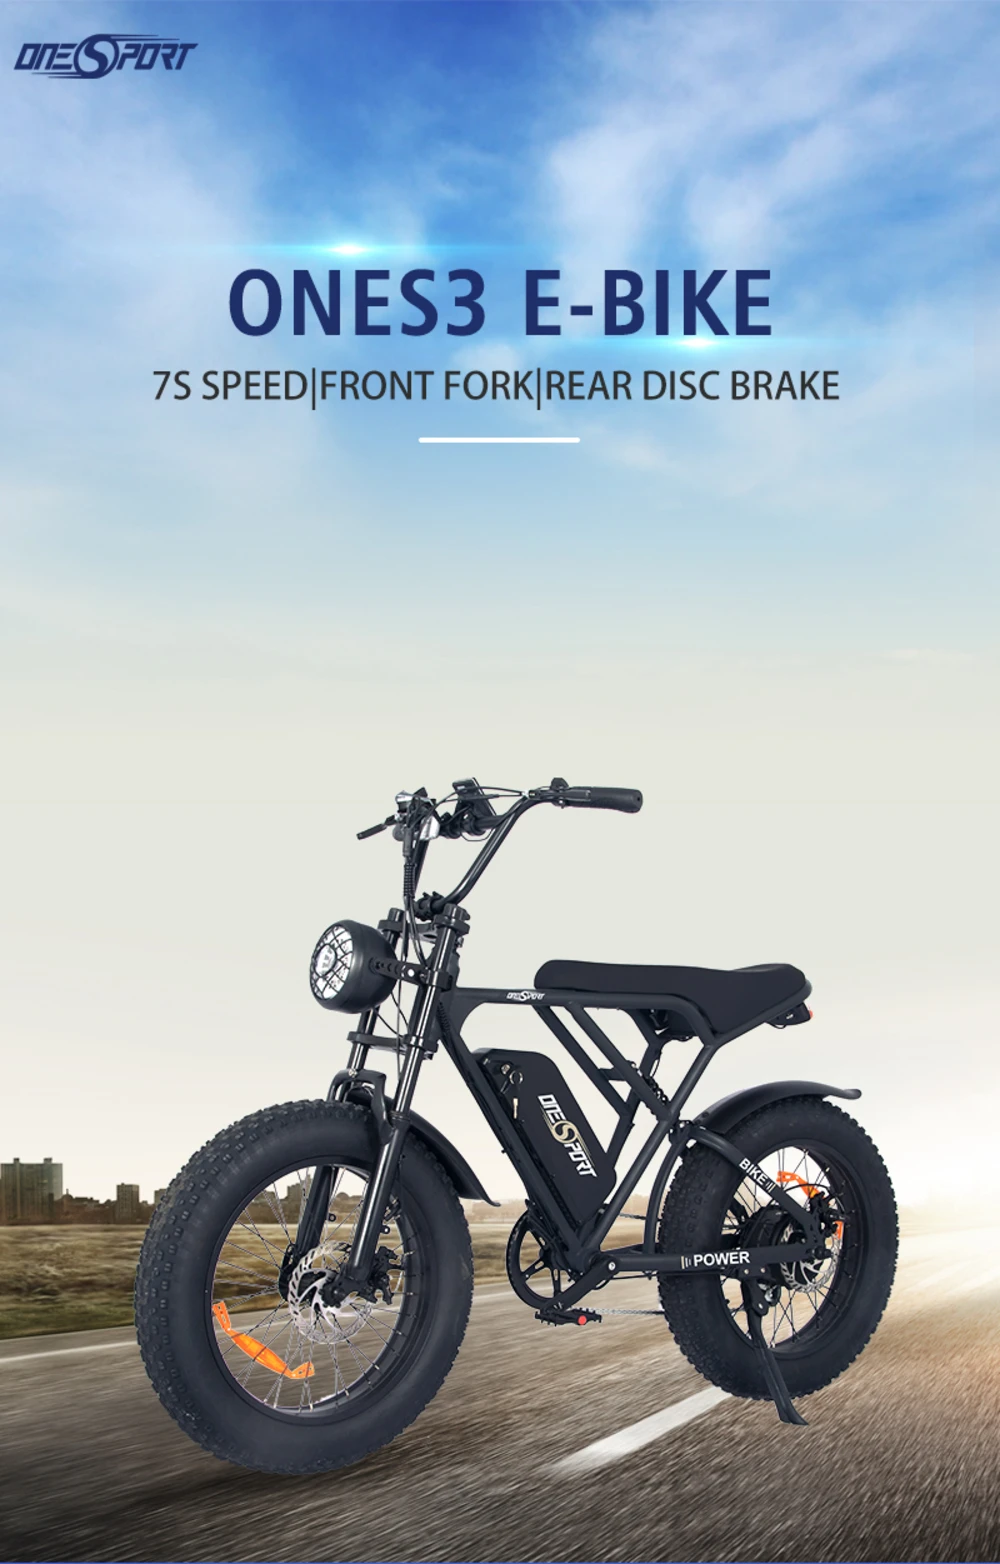 ONESPORT ONES3 20*4.0 inch Fat Tire Electric Bike 500W Motor 48V 15Ah Battery, Liquid LCD Display Shimano 7 Speed Max 50km range Disc Brakes - Black